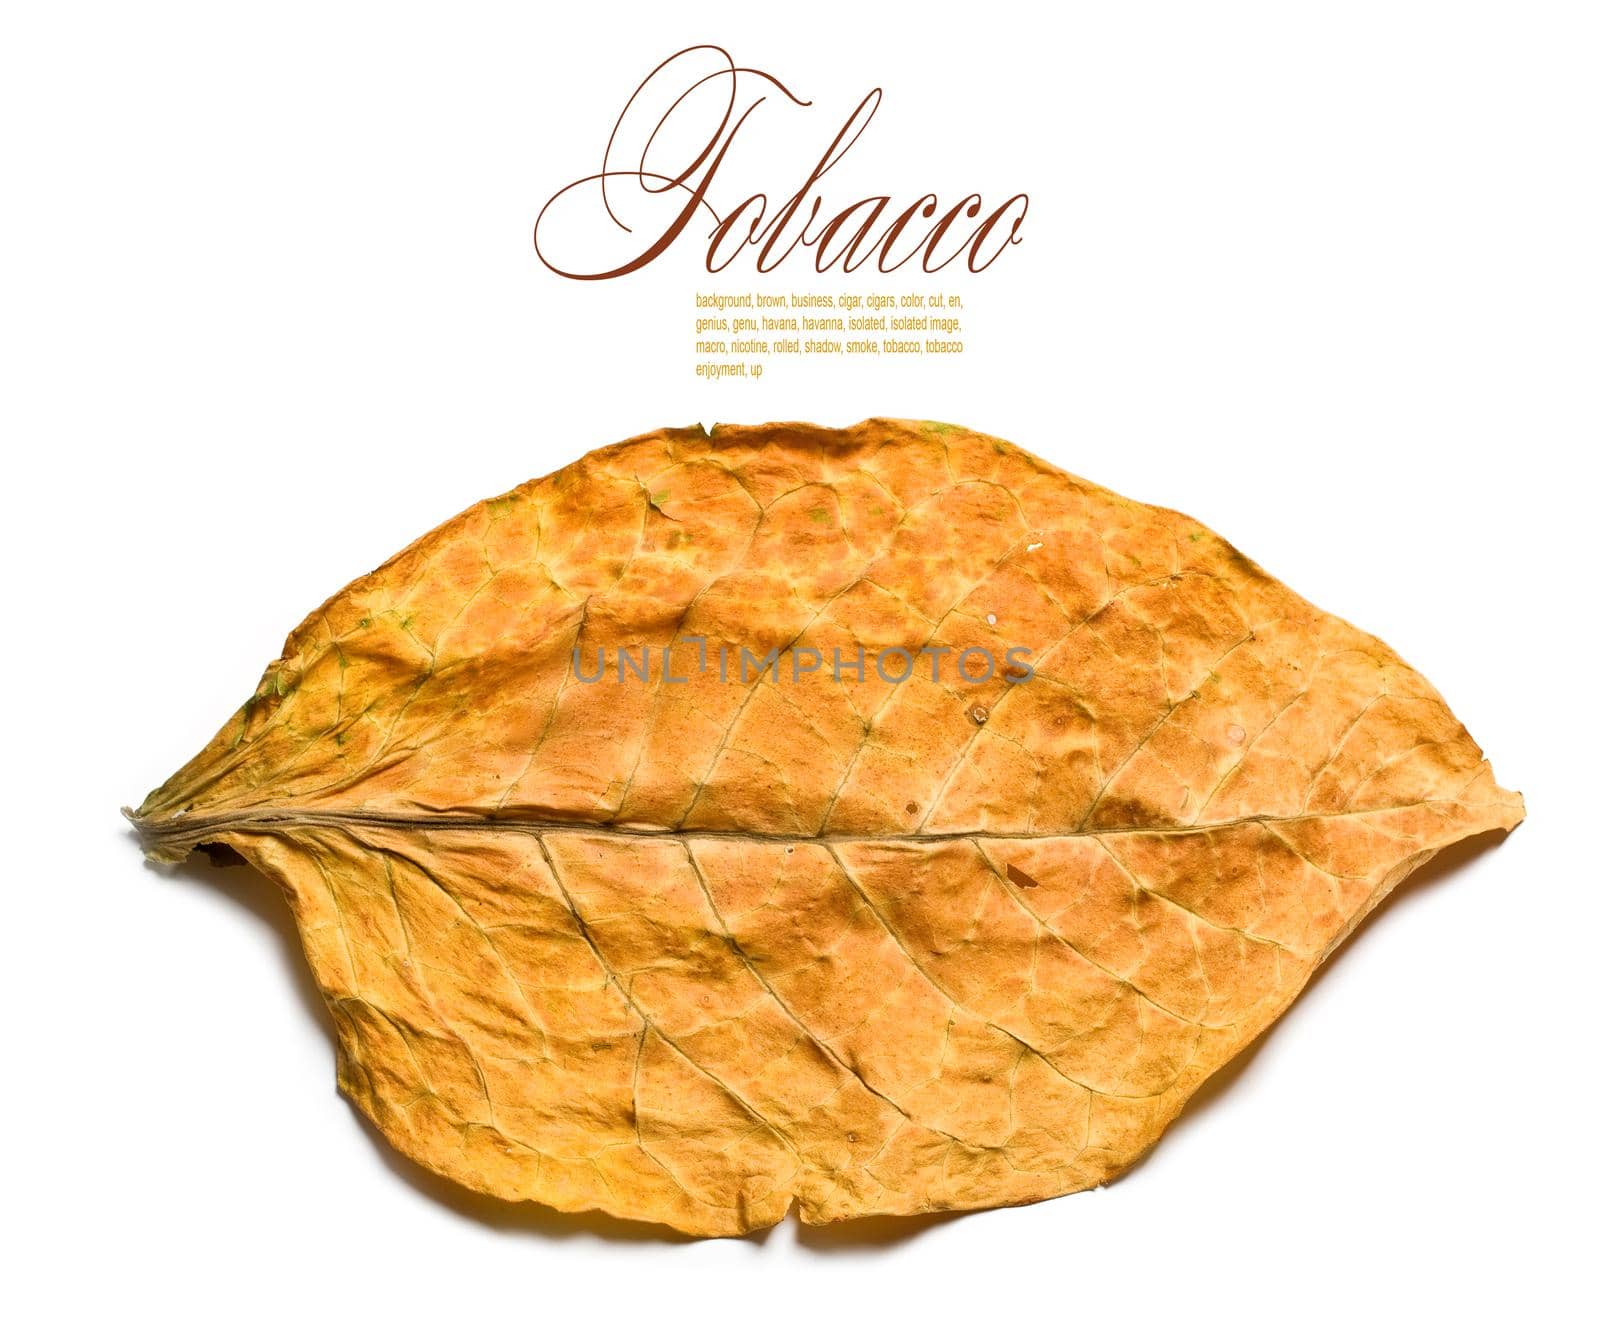 tobacco leaf by kornienko